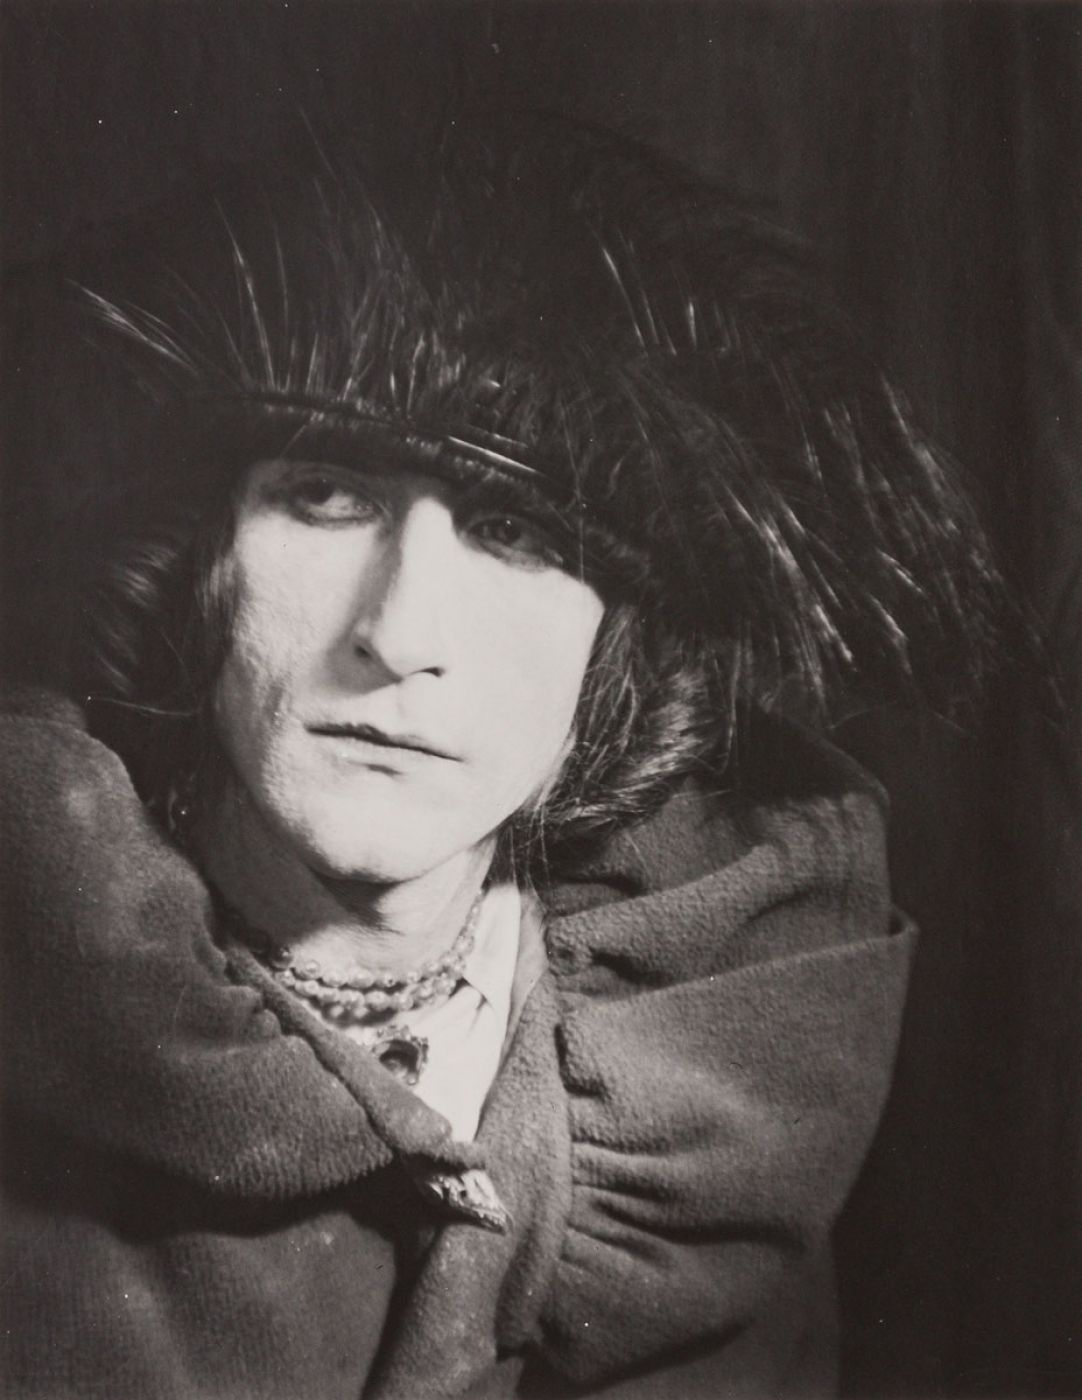 Man Ray, “Portrait of Rrose Sélavy (Marcel Duchamp)”, 1921